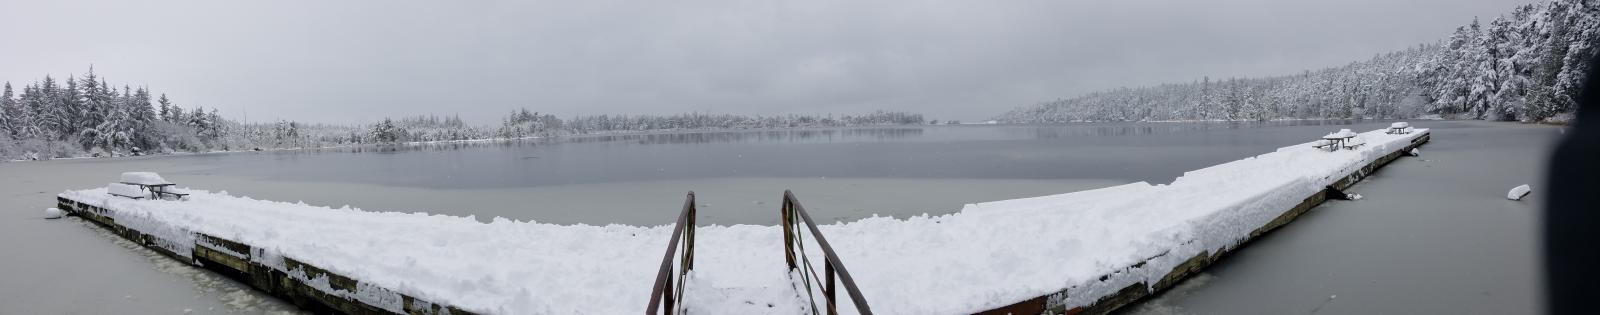 Cranberry lake, Deception Pass